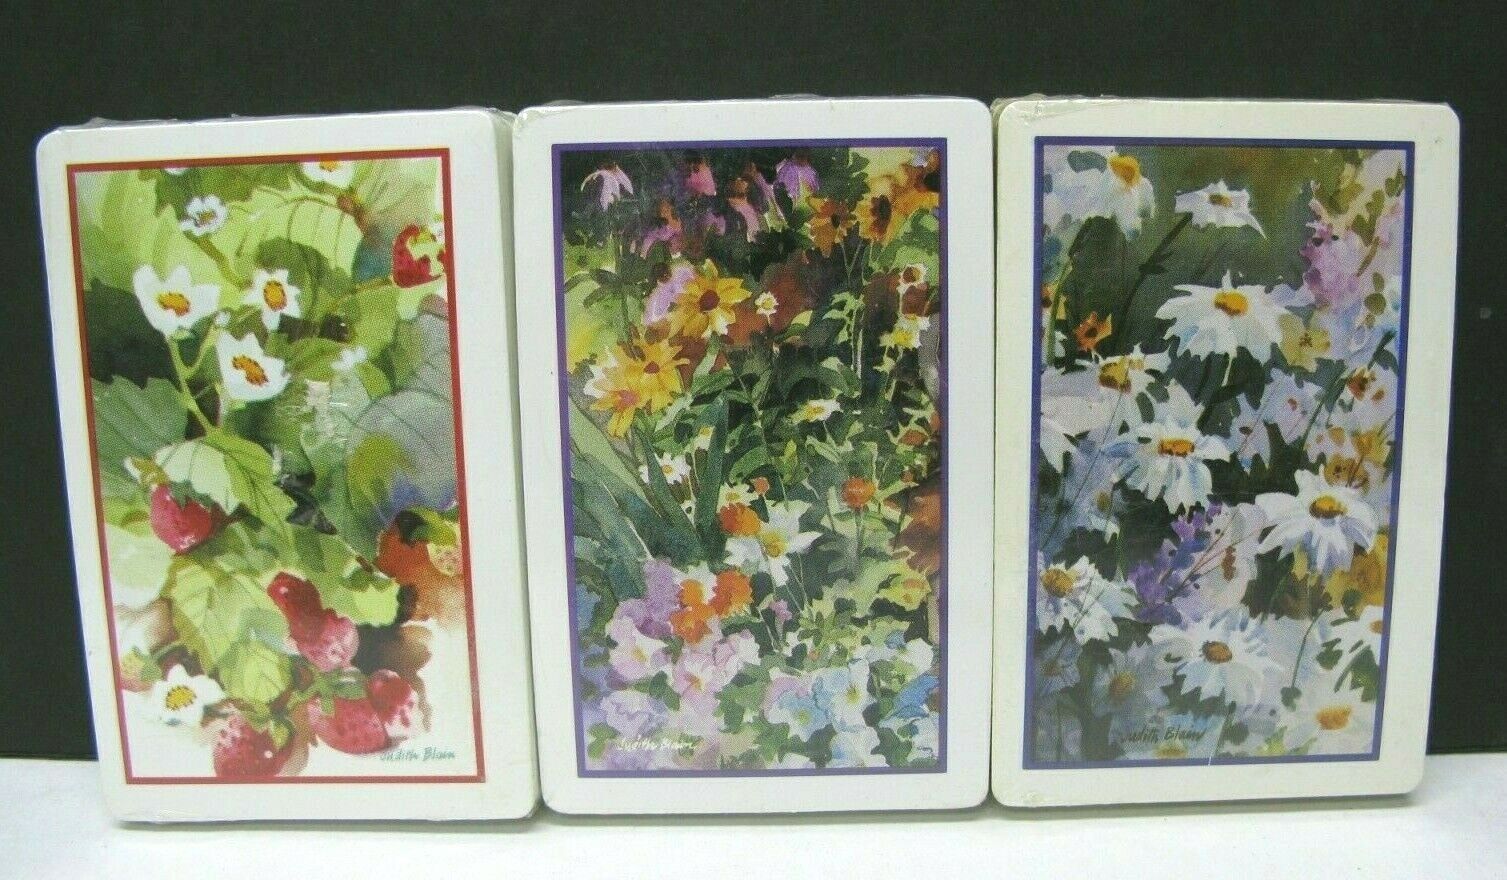 3 New Full Decks of Cards Judith Blain Watercolor Flowers Cottage Garden c1990s